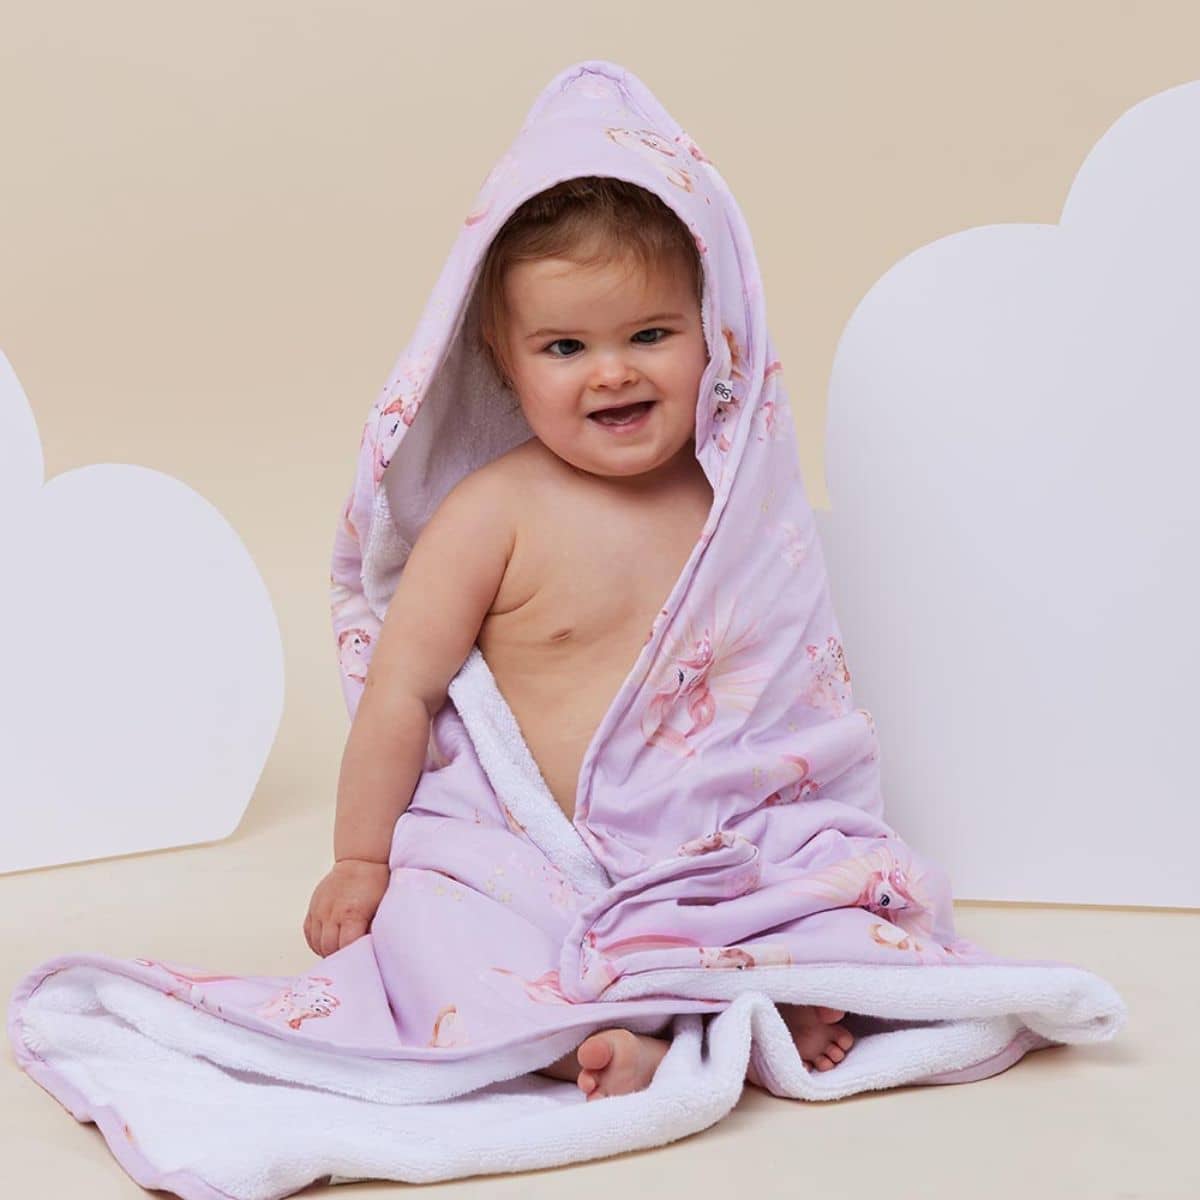 Snuggle Hunny Organic Hooded Baby Towel - Unicorn